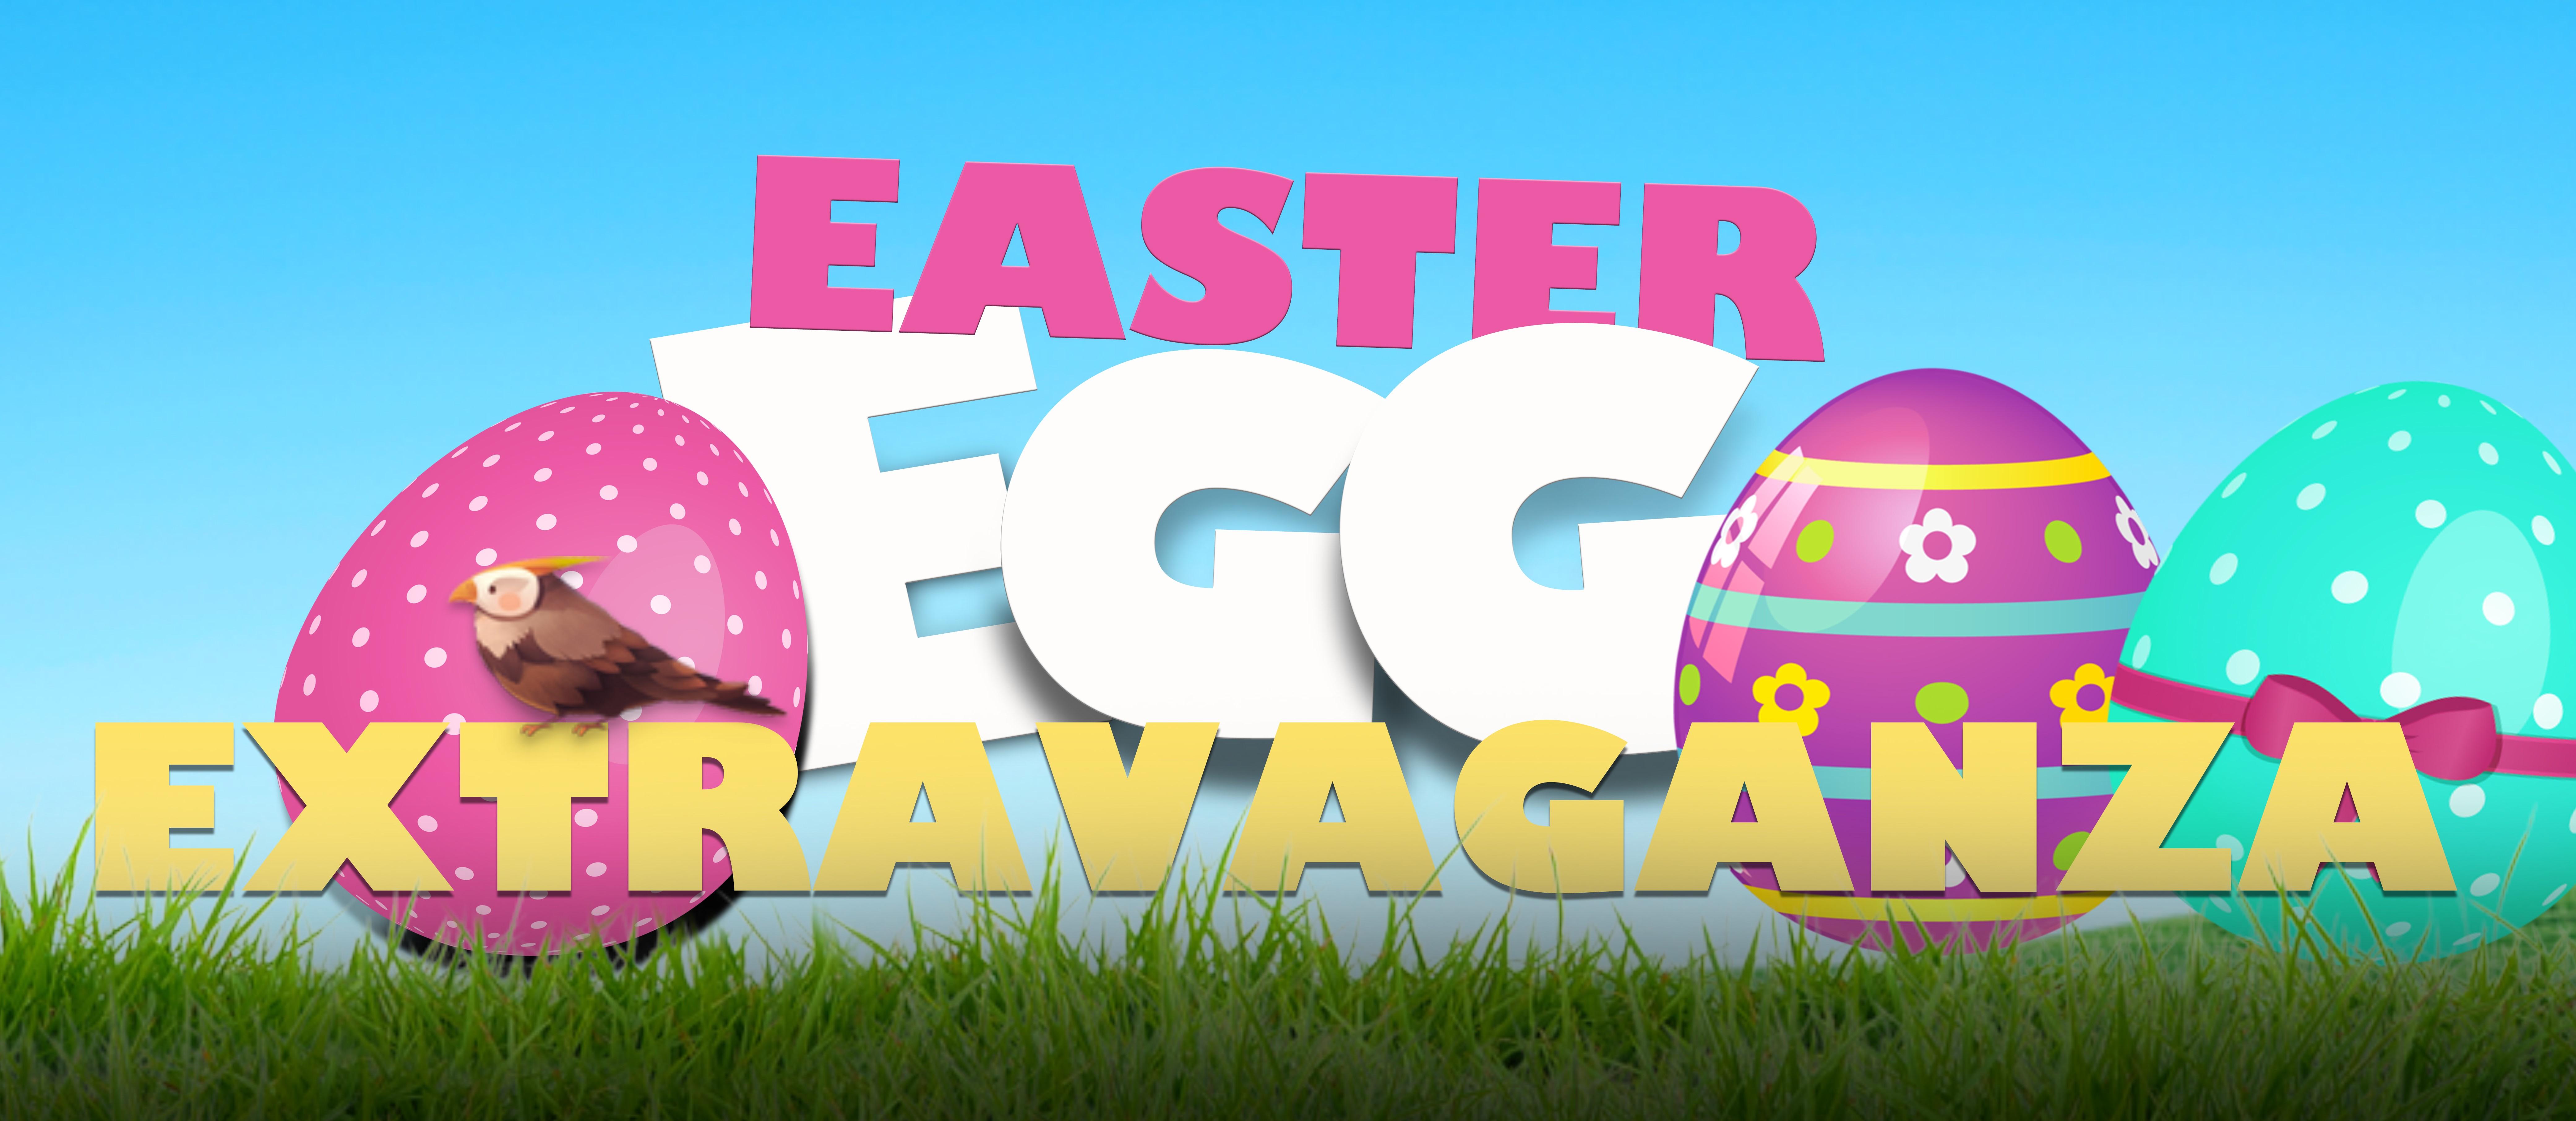 Fallbrook Easter Eggstravaganza